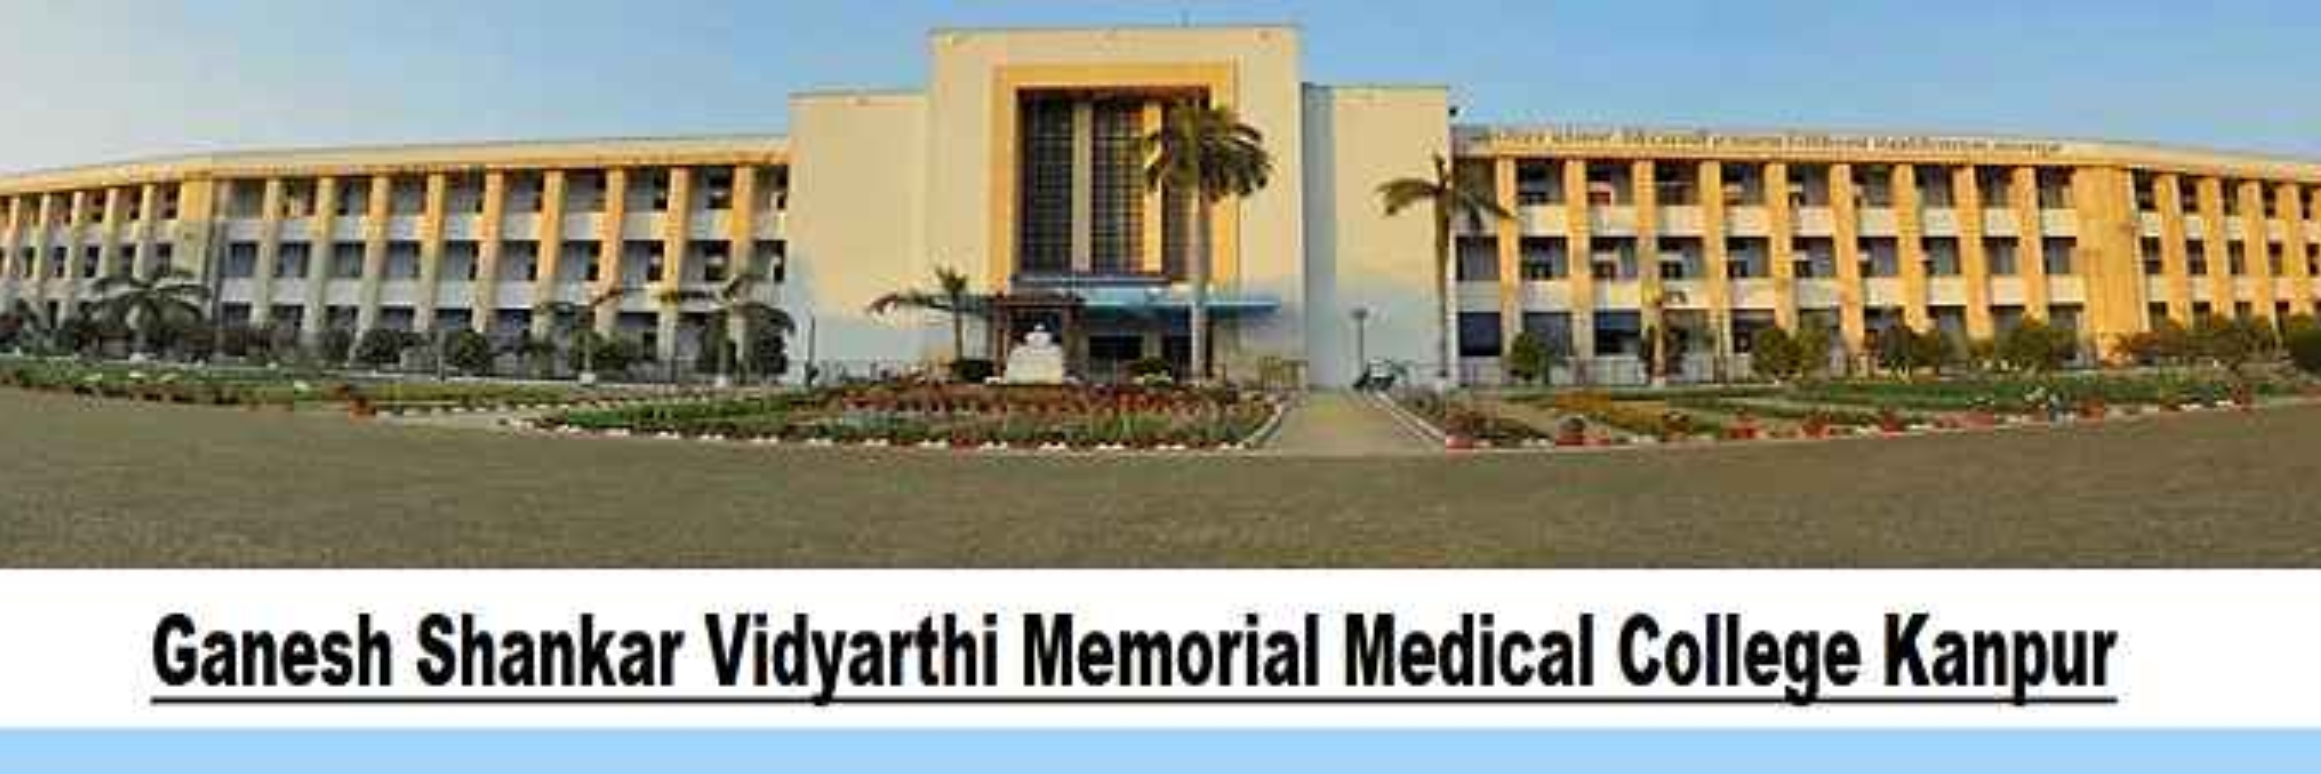 Ganesh Shankar Vidyarthi Memorial Medical College, Kanpur